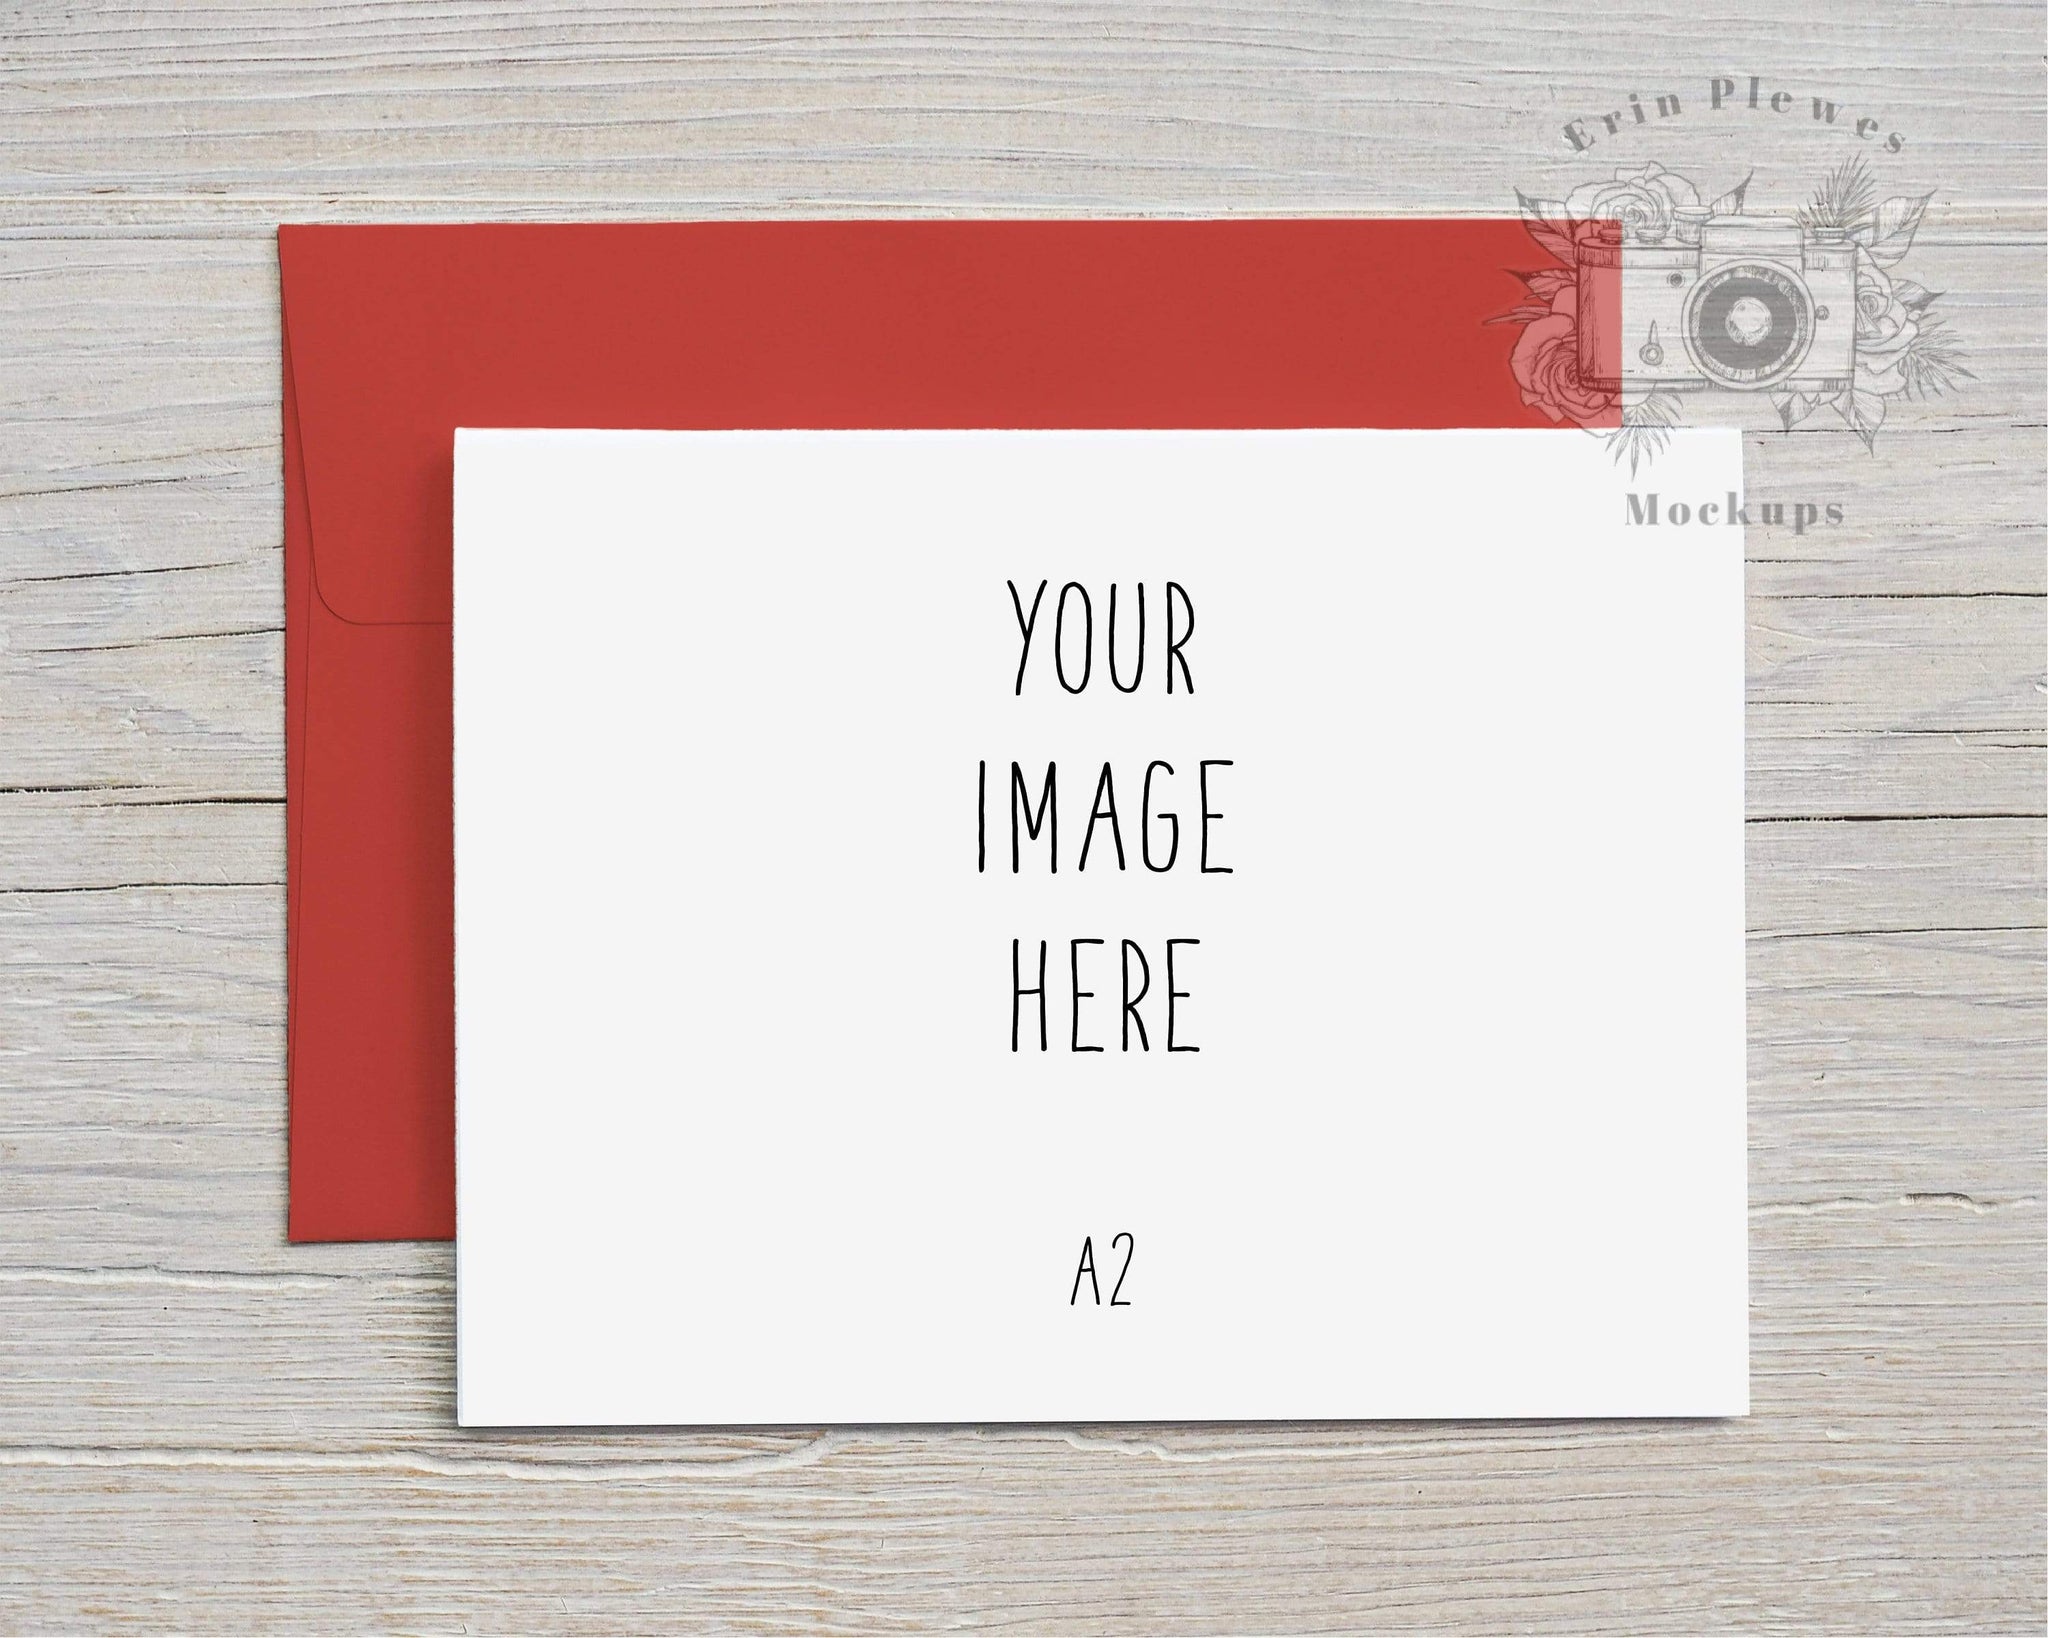 A20 Card Mockup Red Envelope, Greeting Card Mock-up Landscape For A2 Card Template